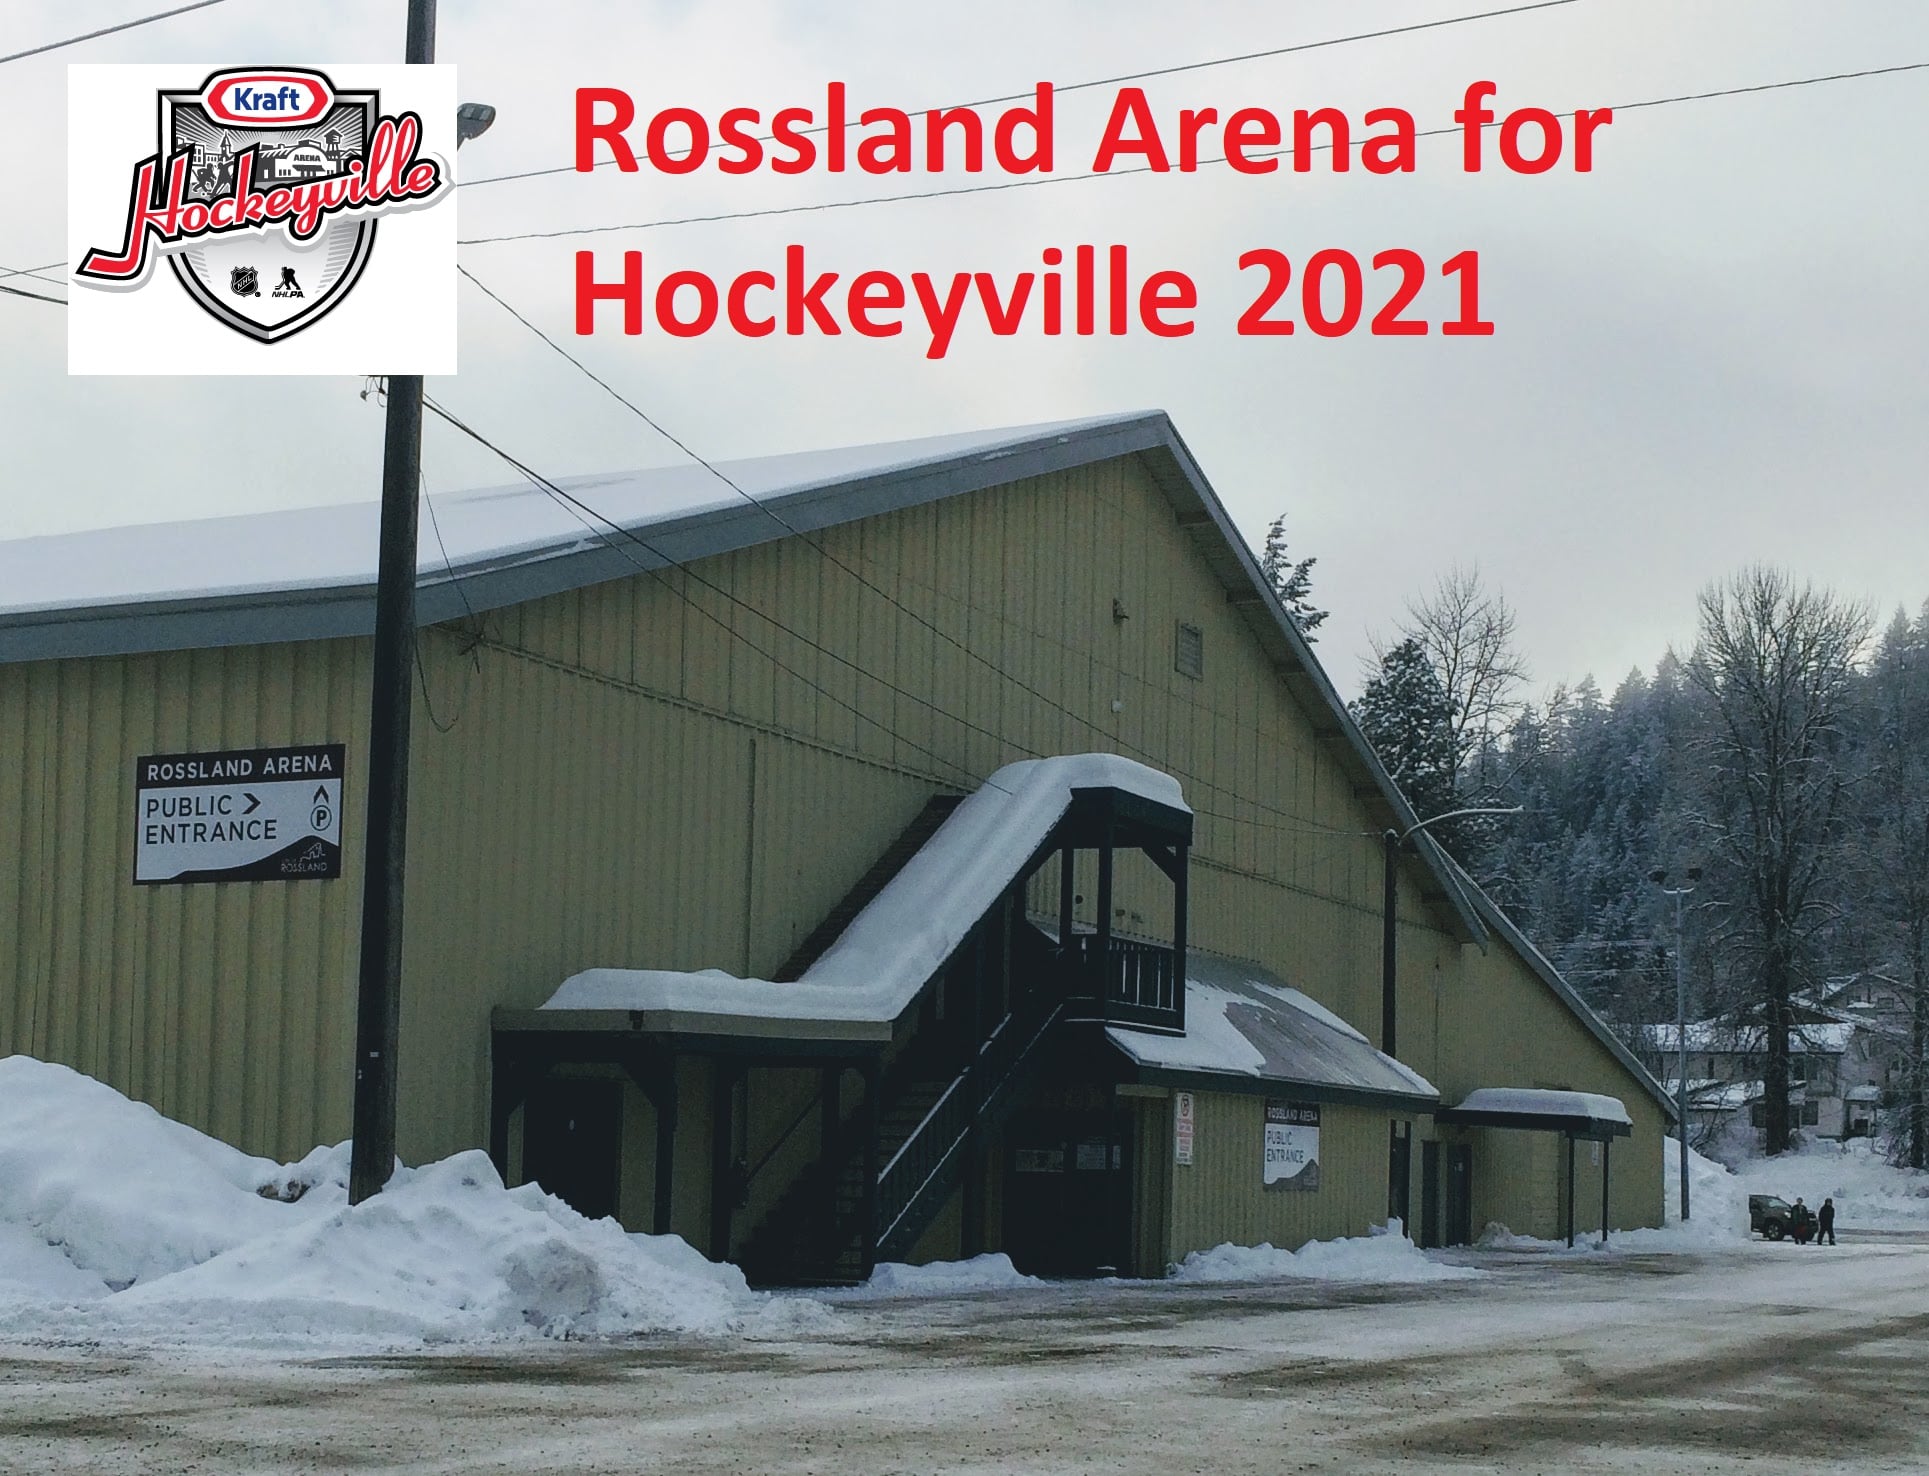 Rossland Arena Nominated For Kraft Hockeyville 2021 – Help is Needed